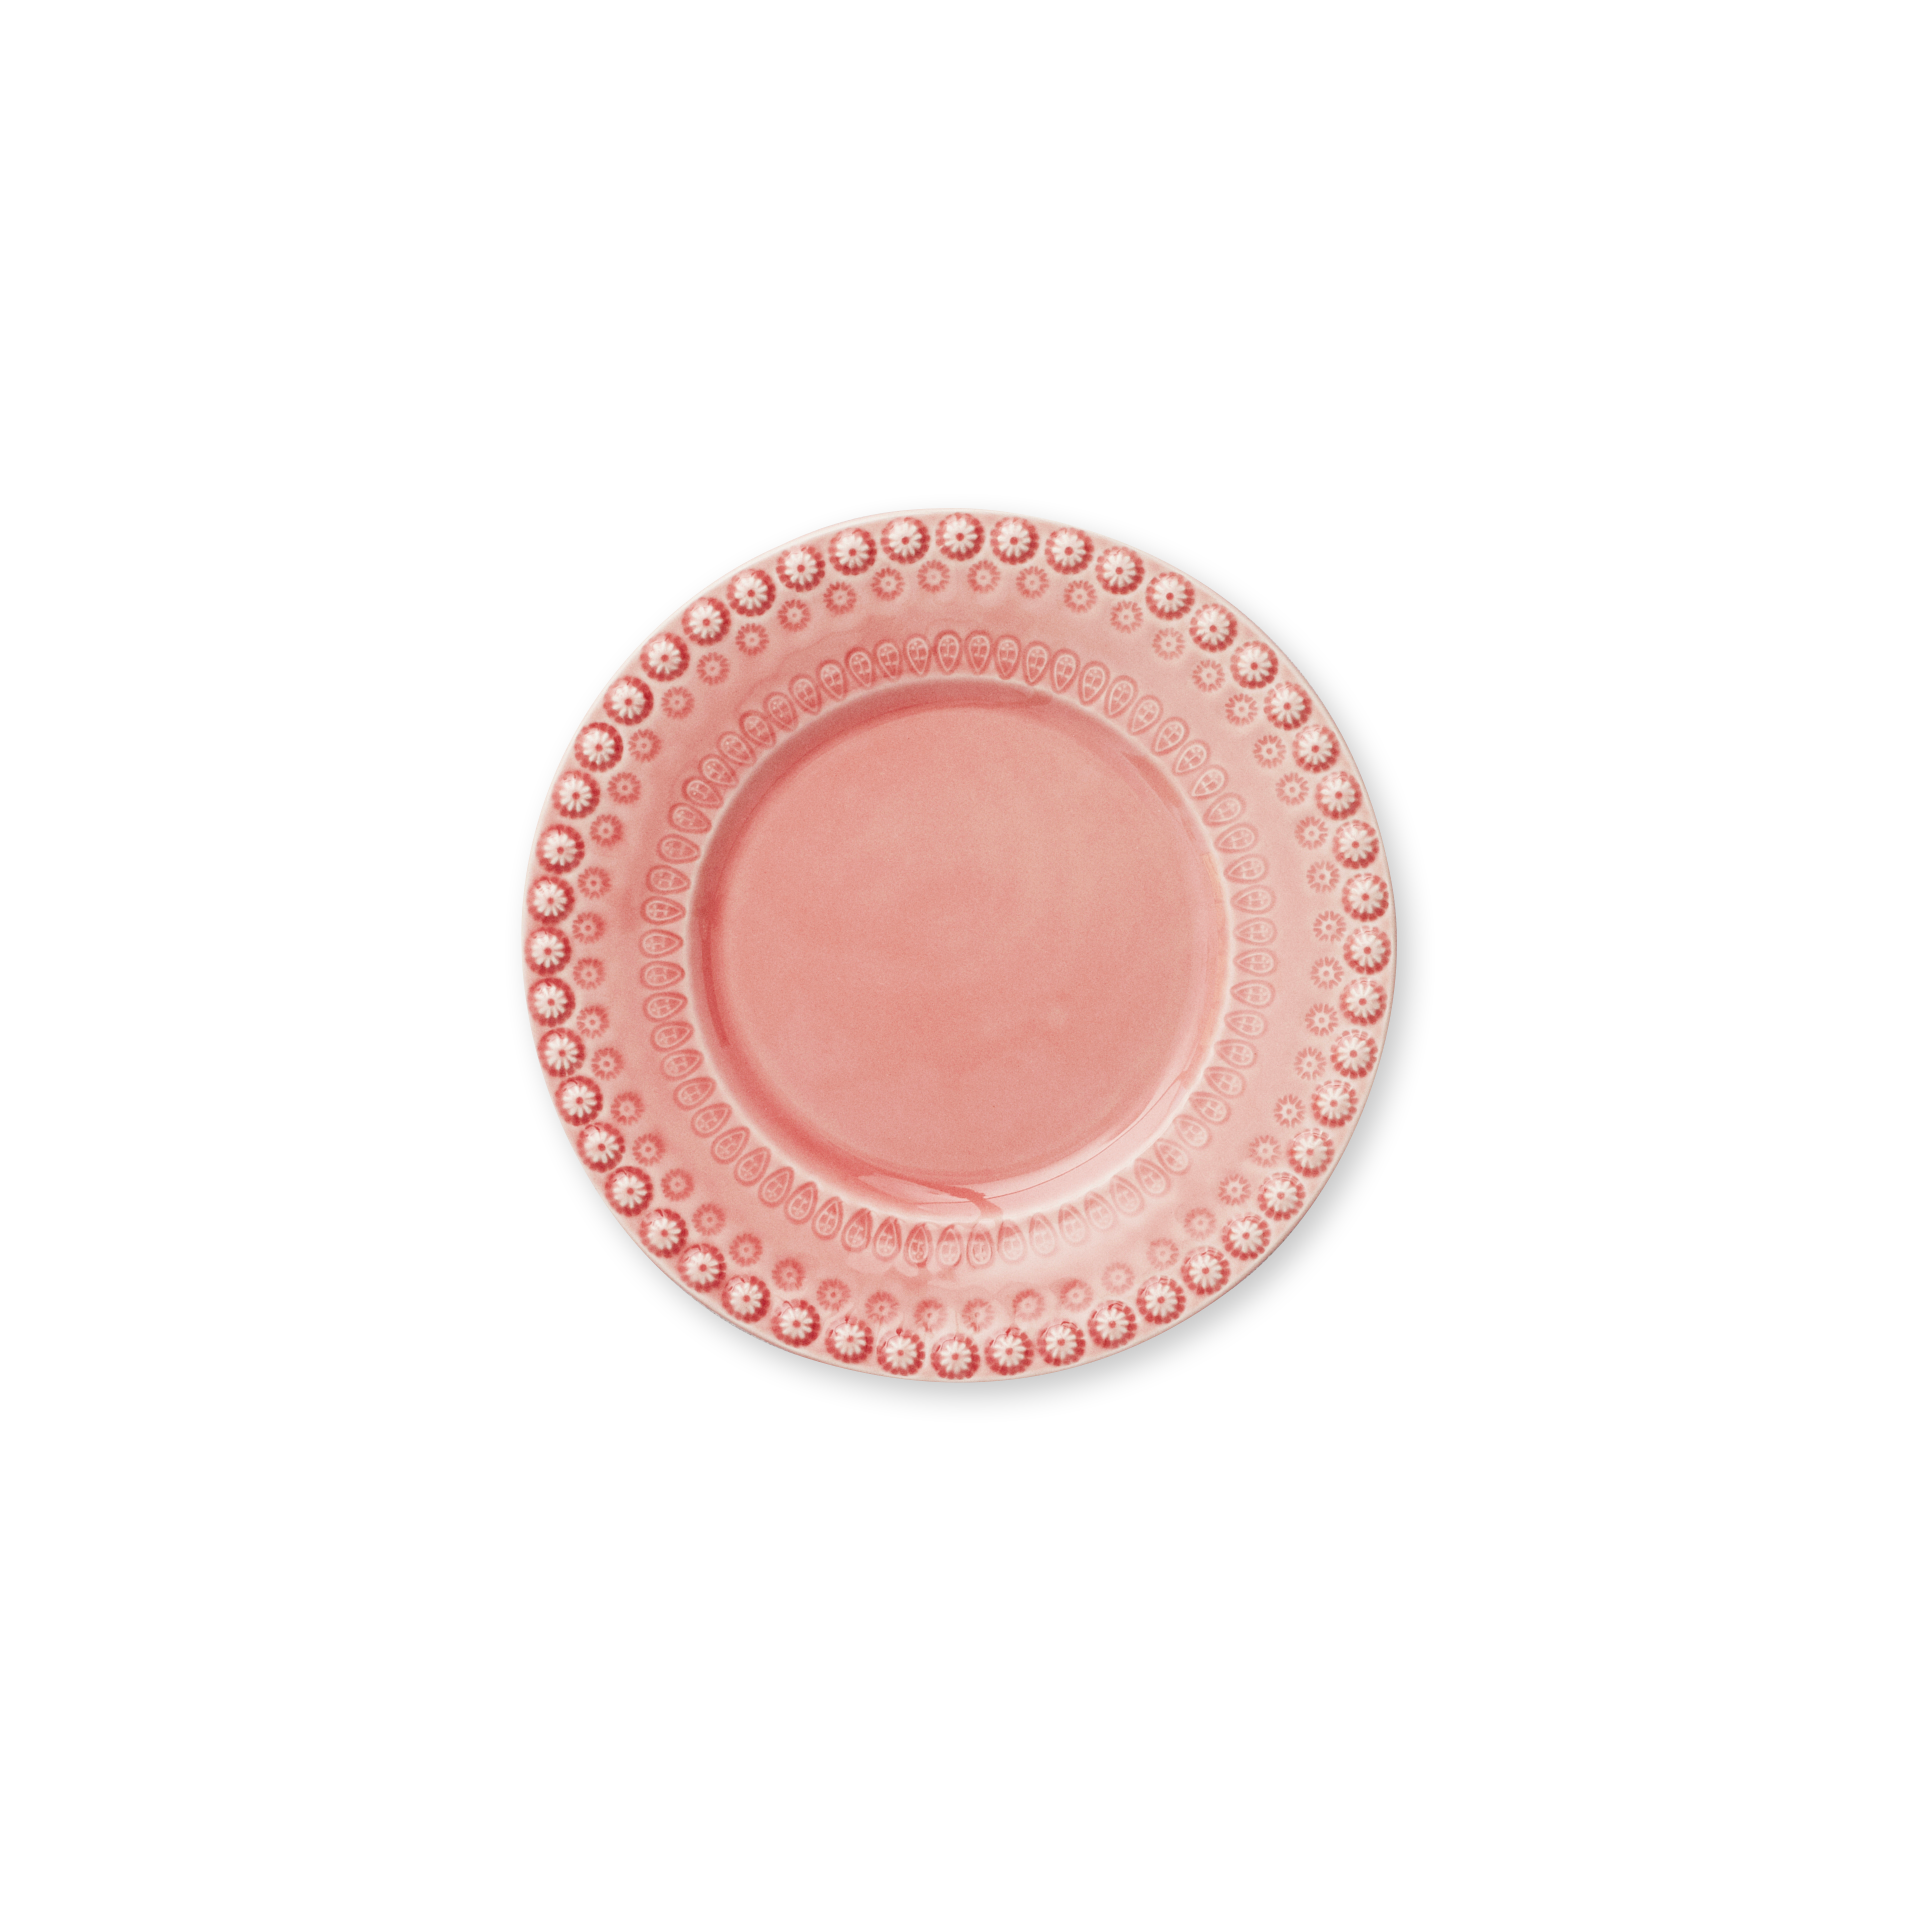 Rent: Fantasia Pink Dessert